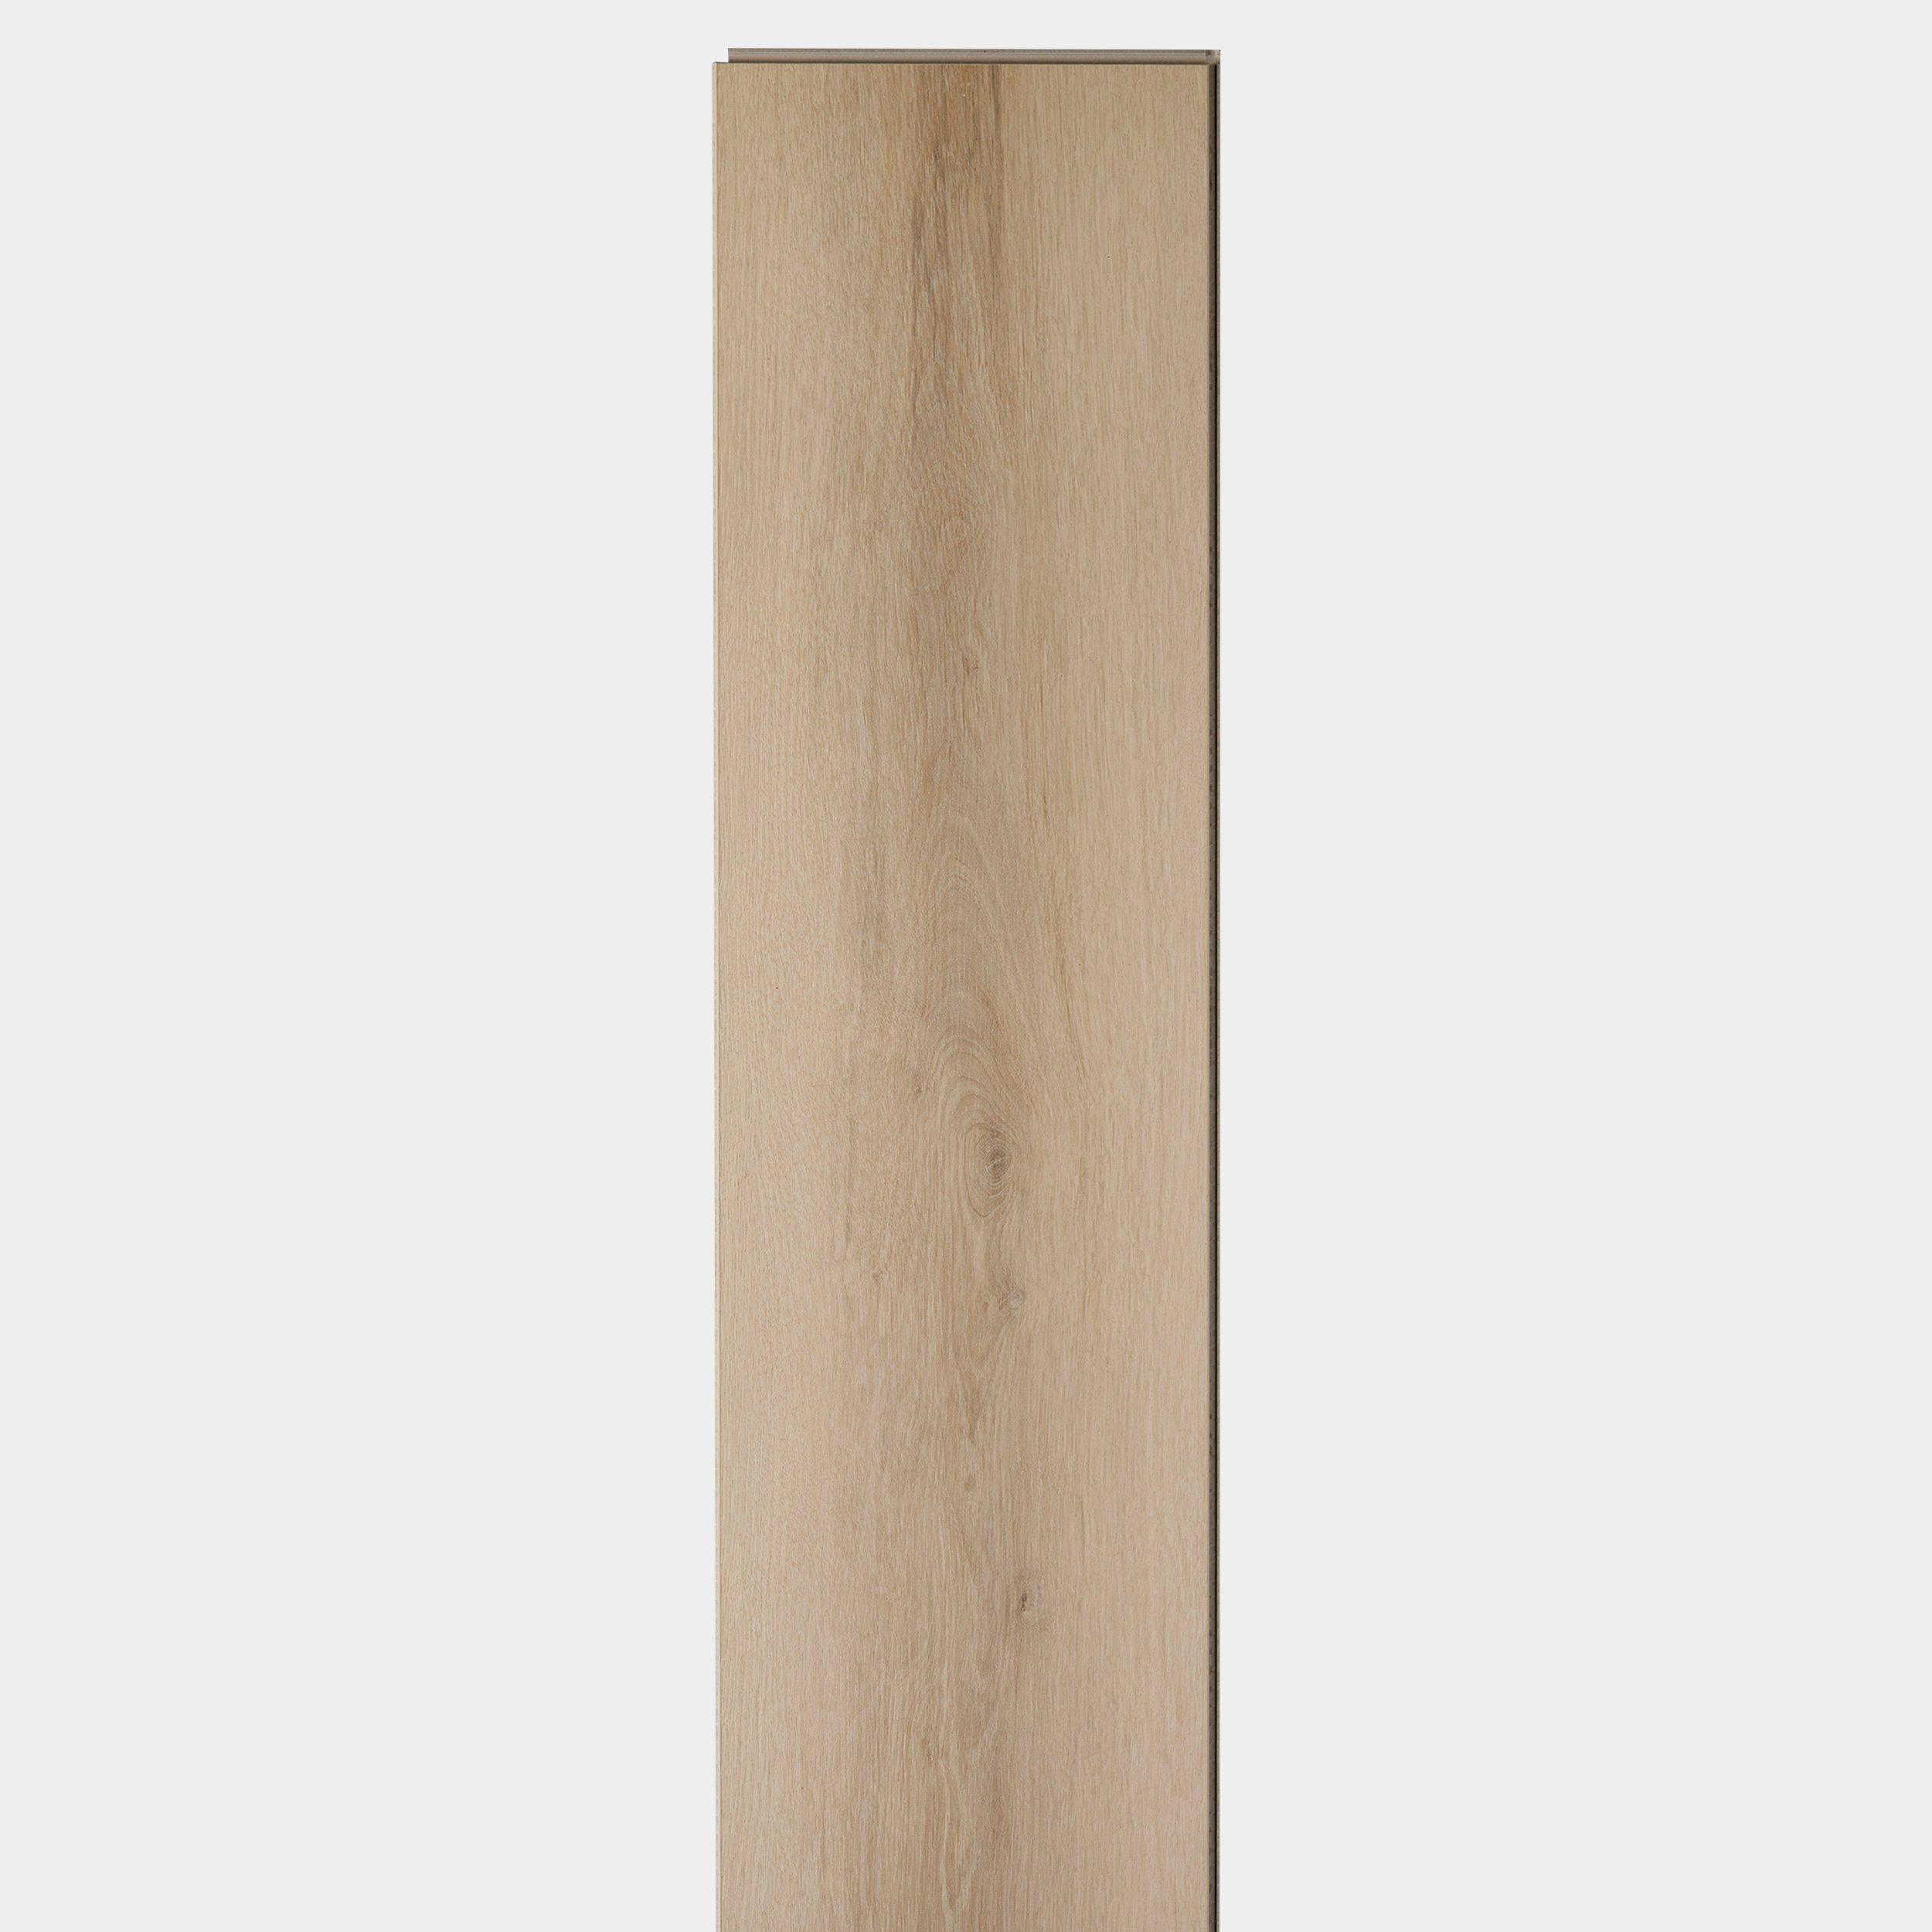 Sugar Sand Rigid Core Luxury Vinyl Plank - Cork Back